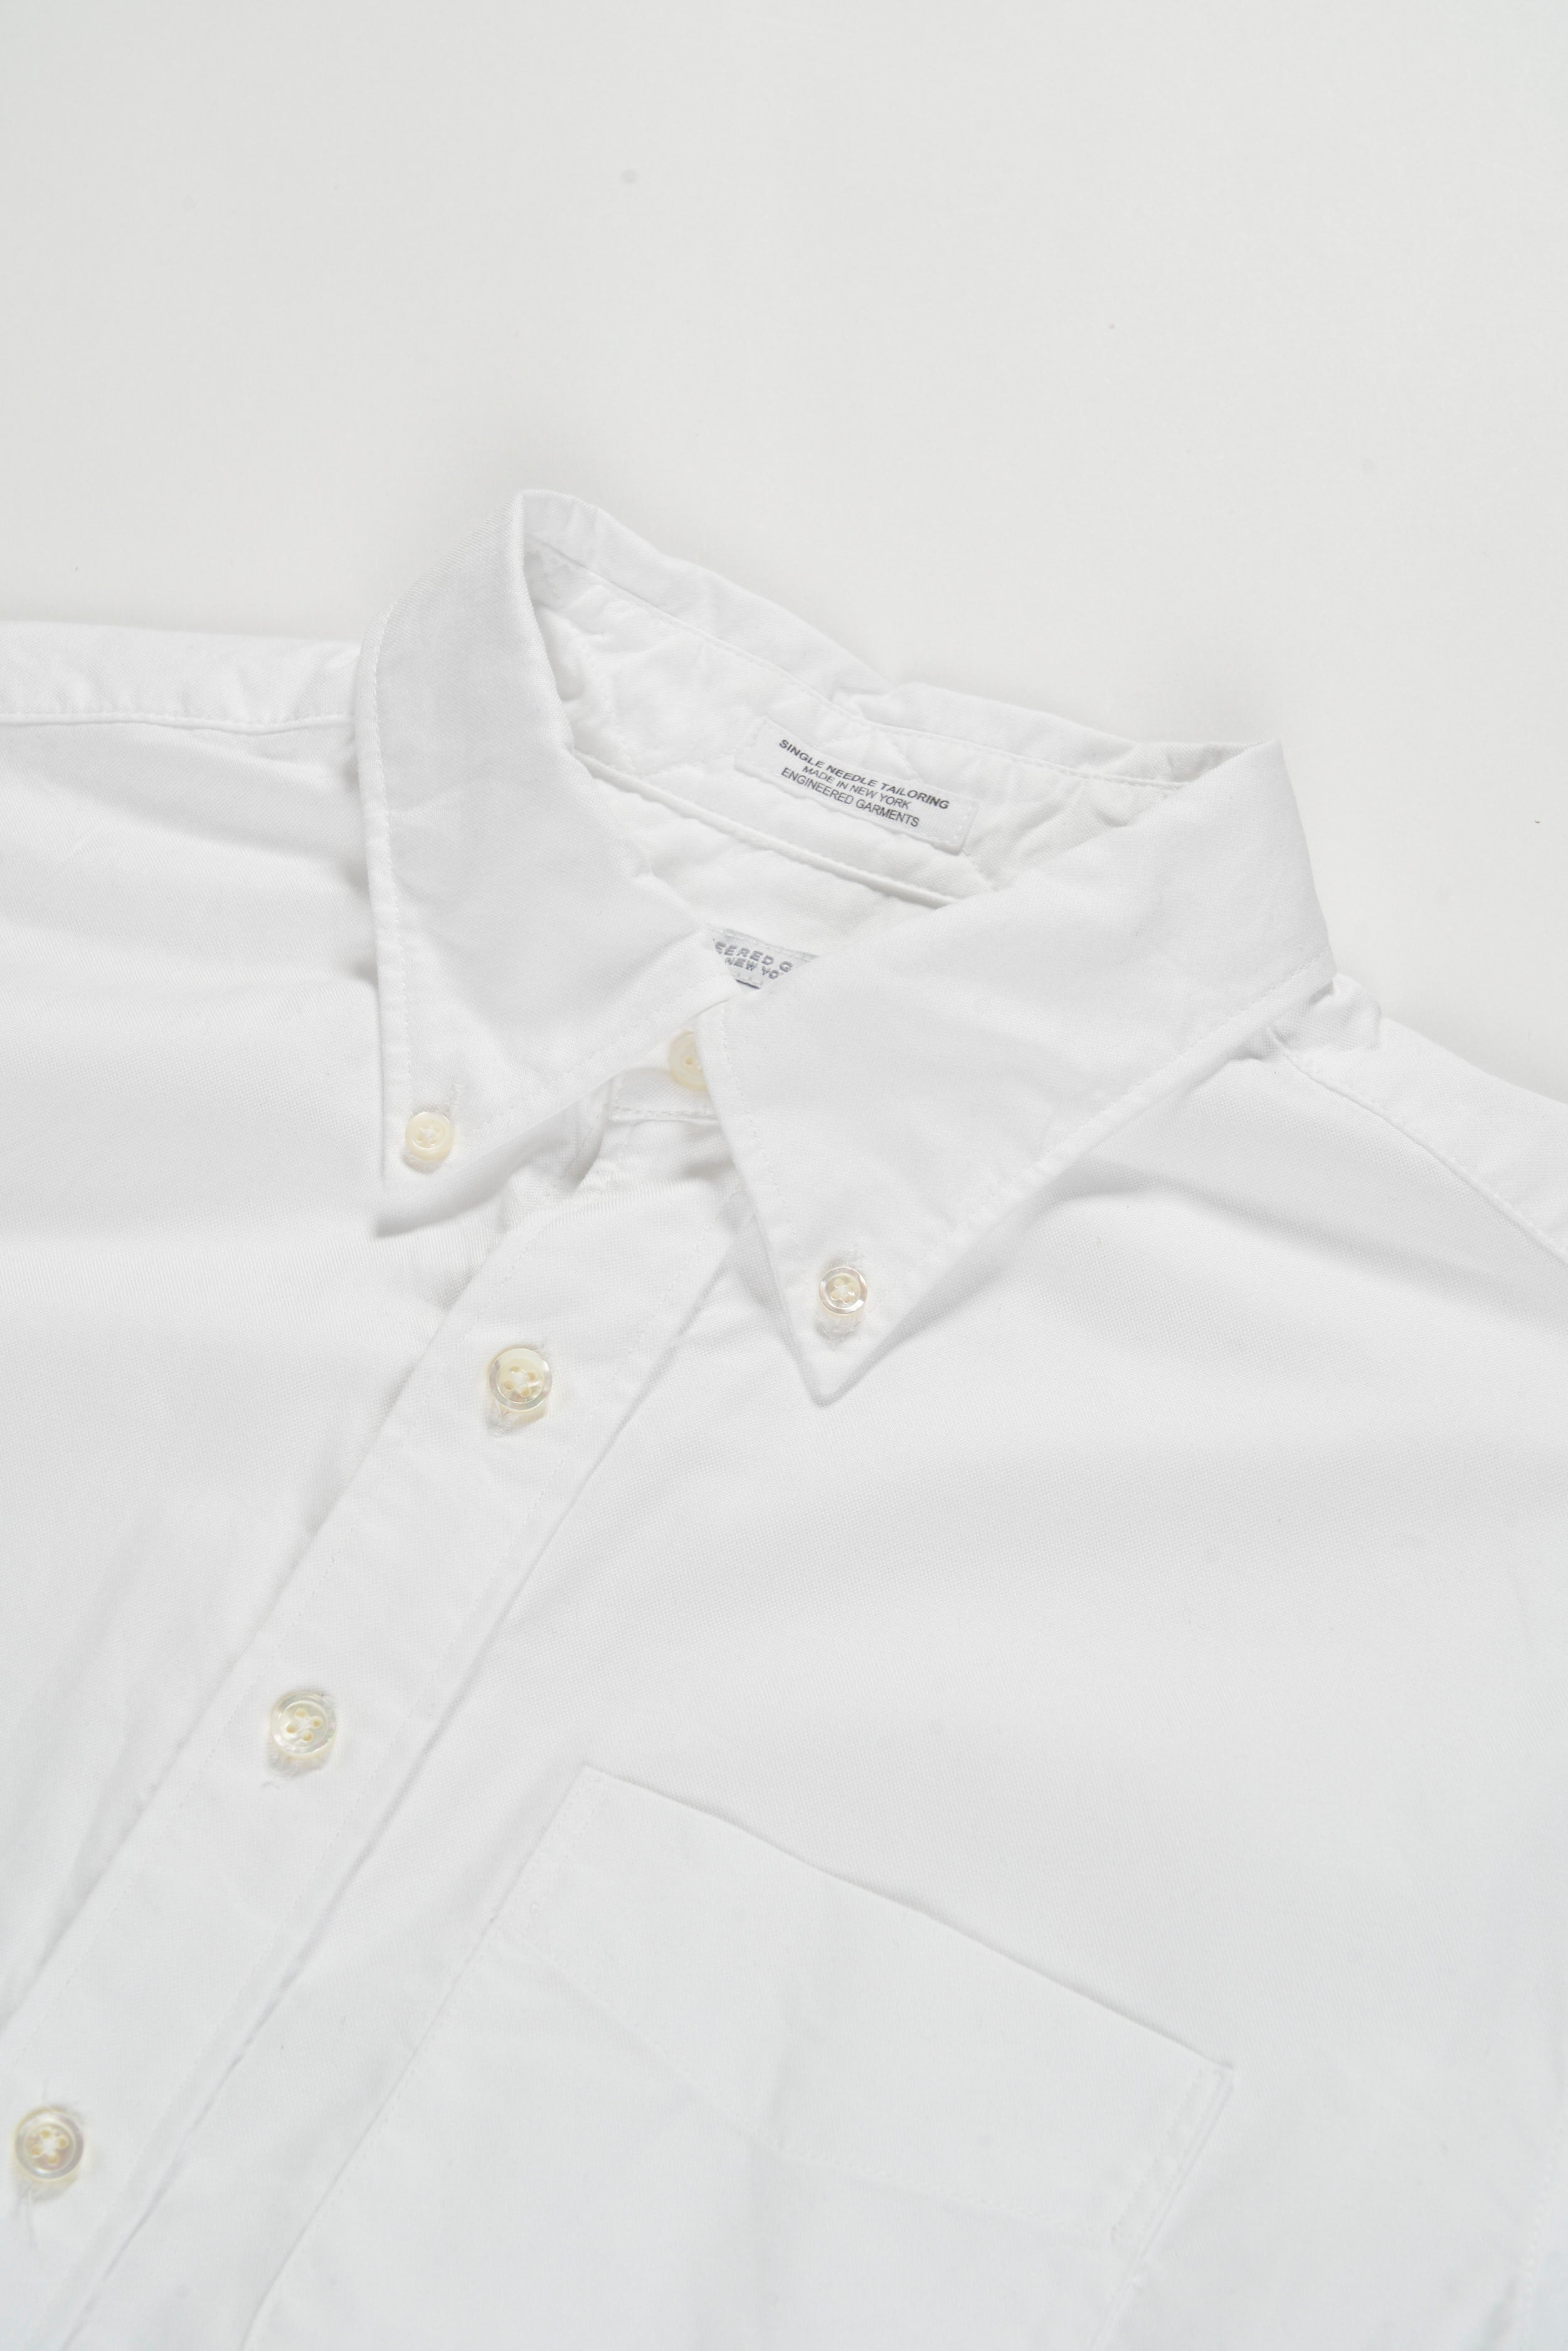 Engineered Garments 19 Century BD Shirt - White Cotton Oxford